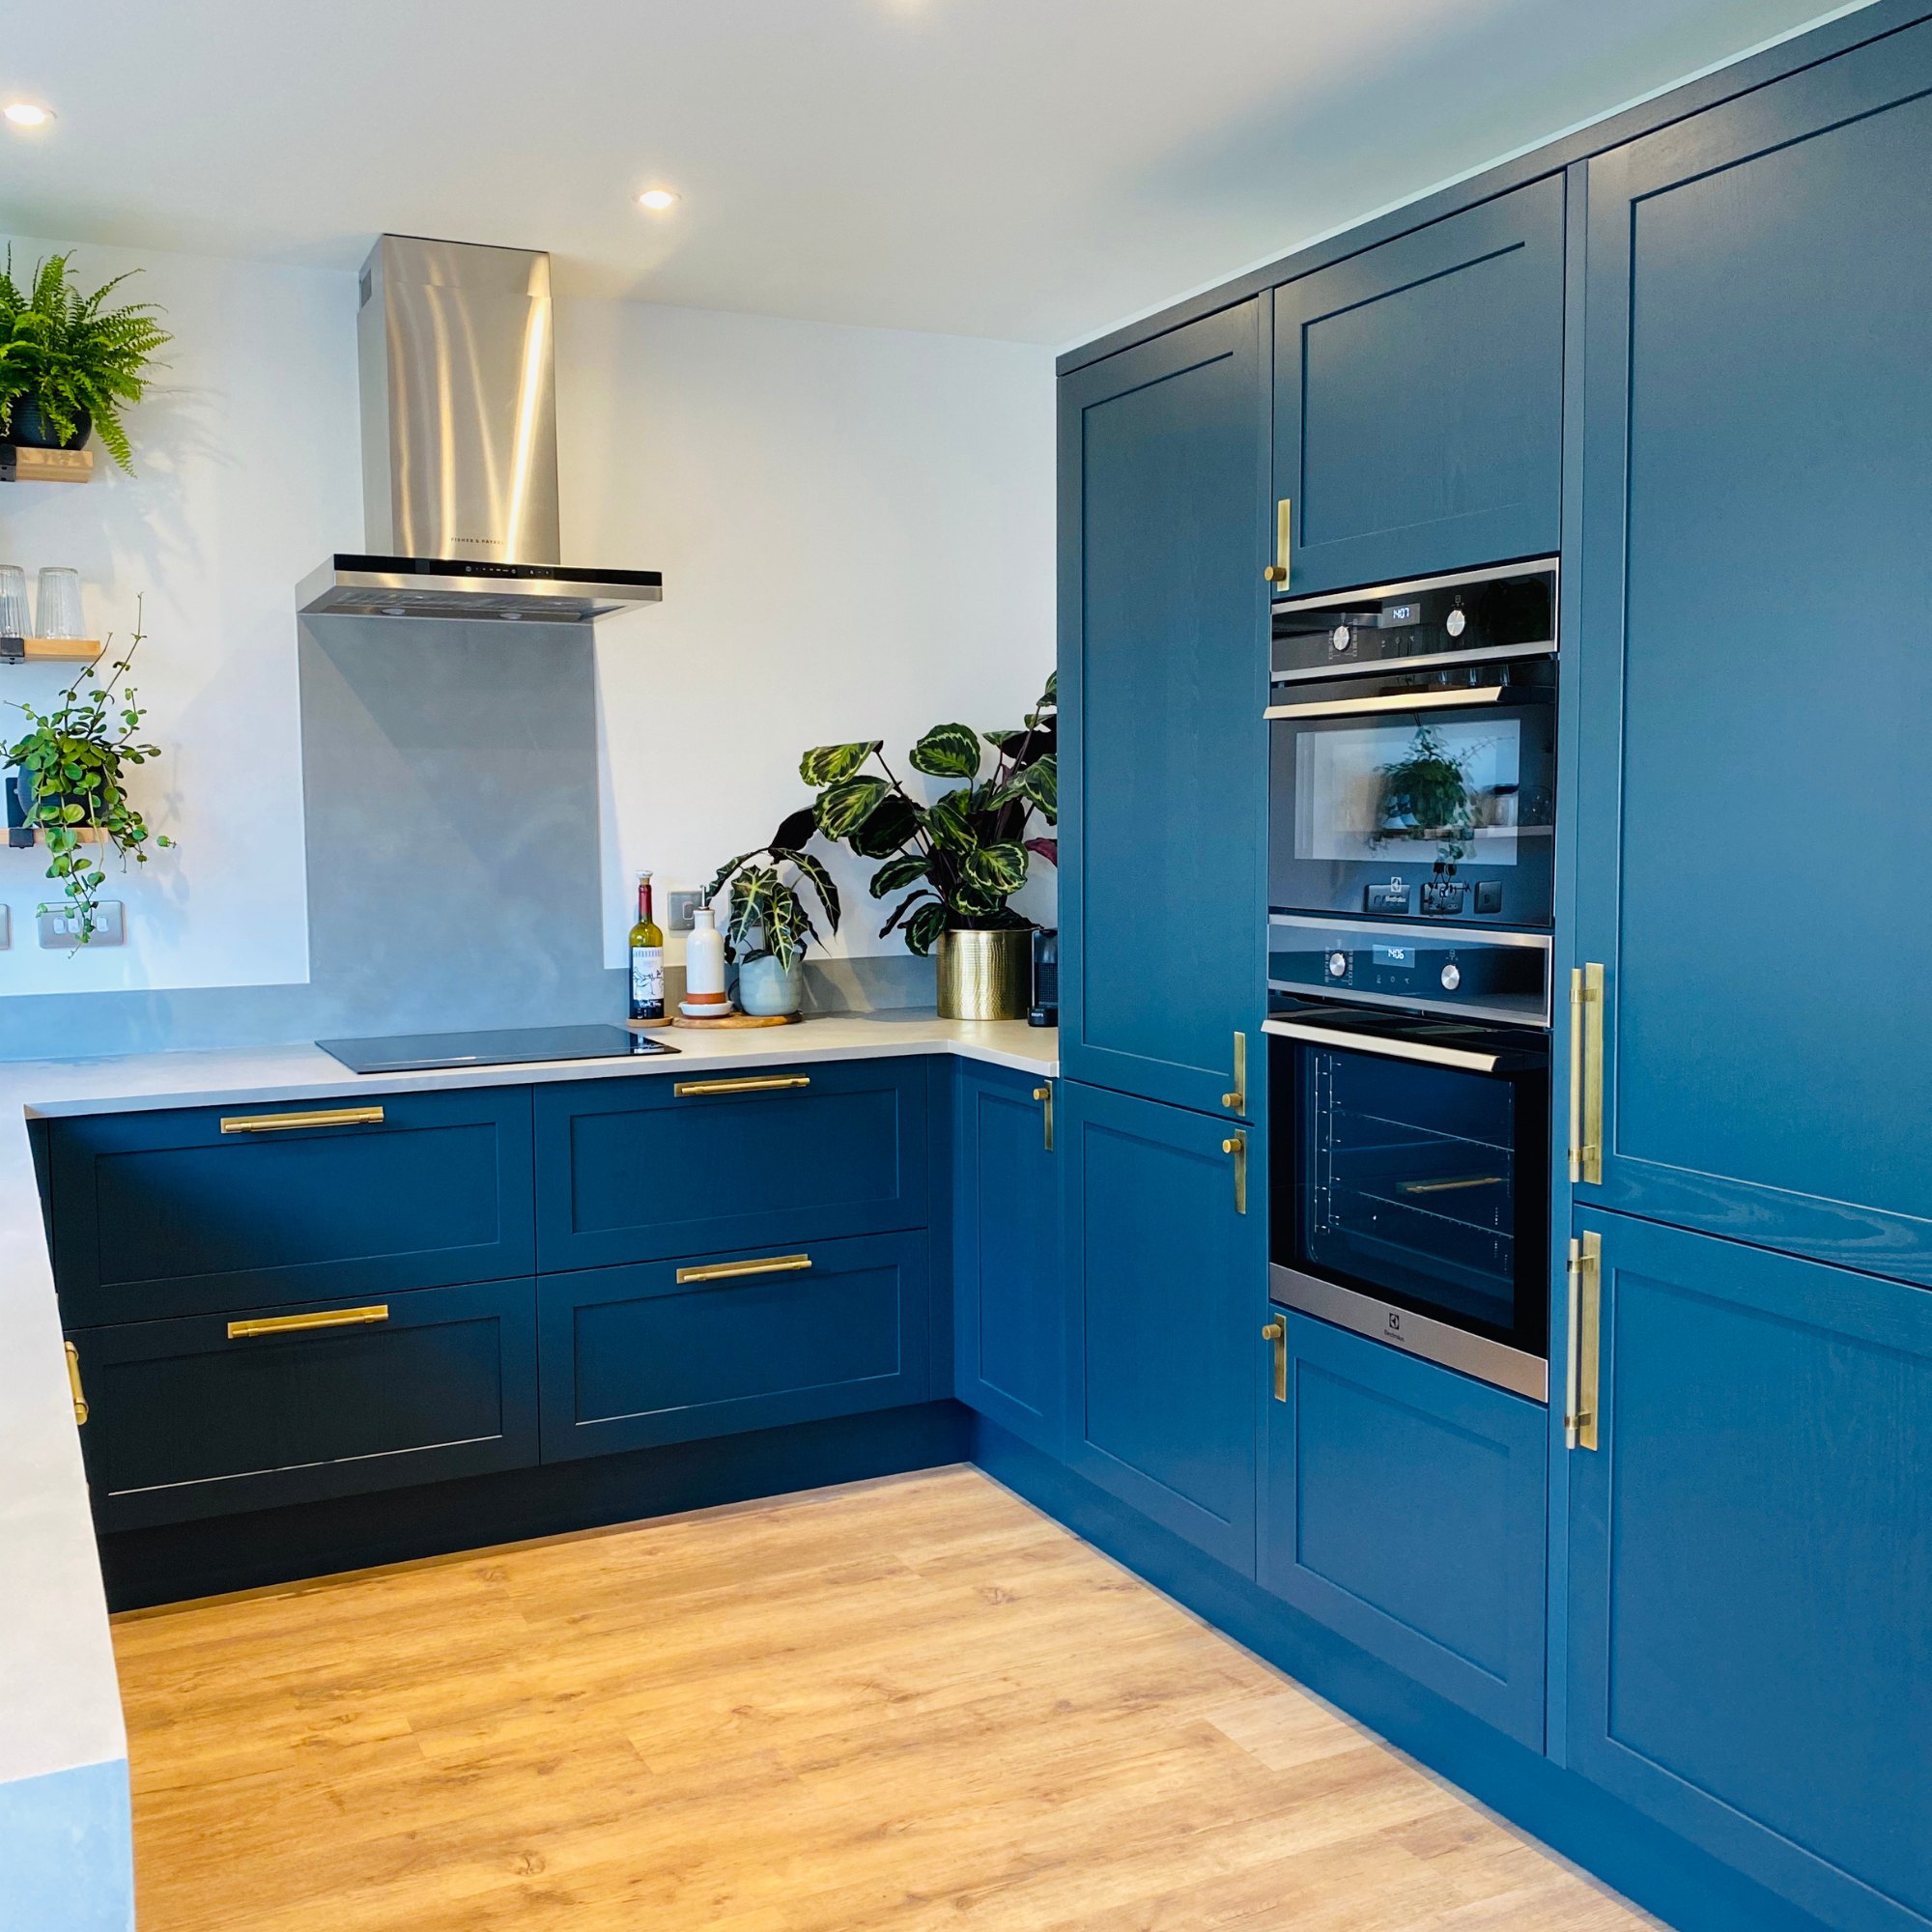 interior-design-painter-decorator-plymouth-kitchen-inspiration